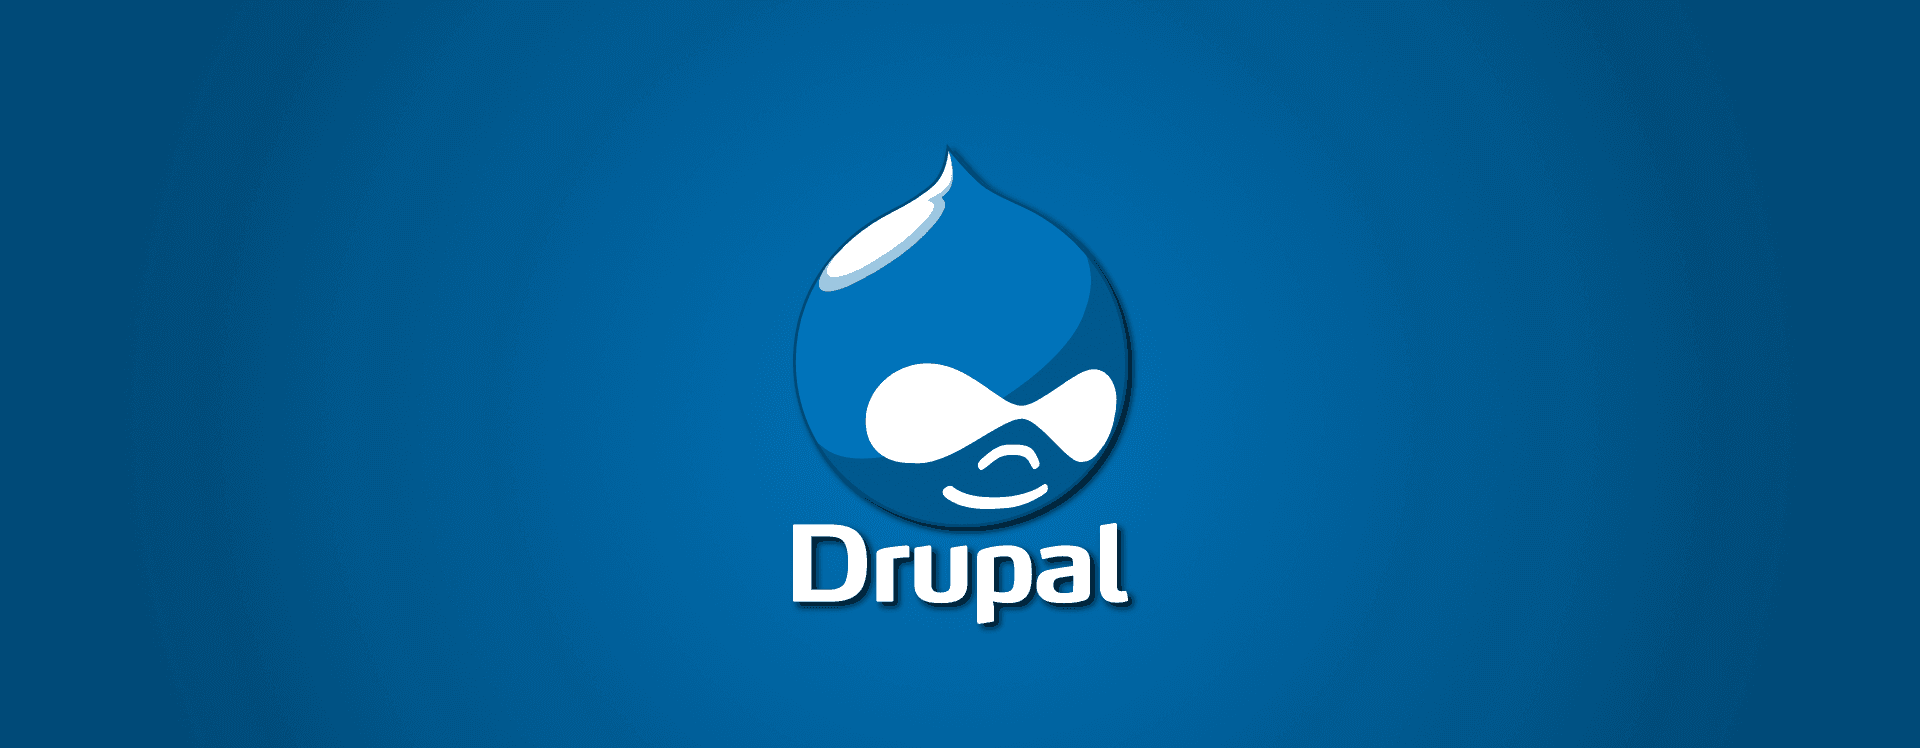 drupal 7 download for ubuntu 14.04